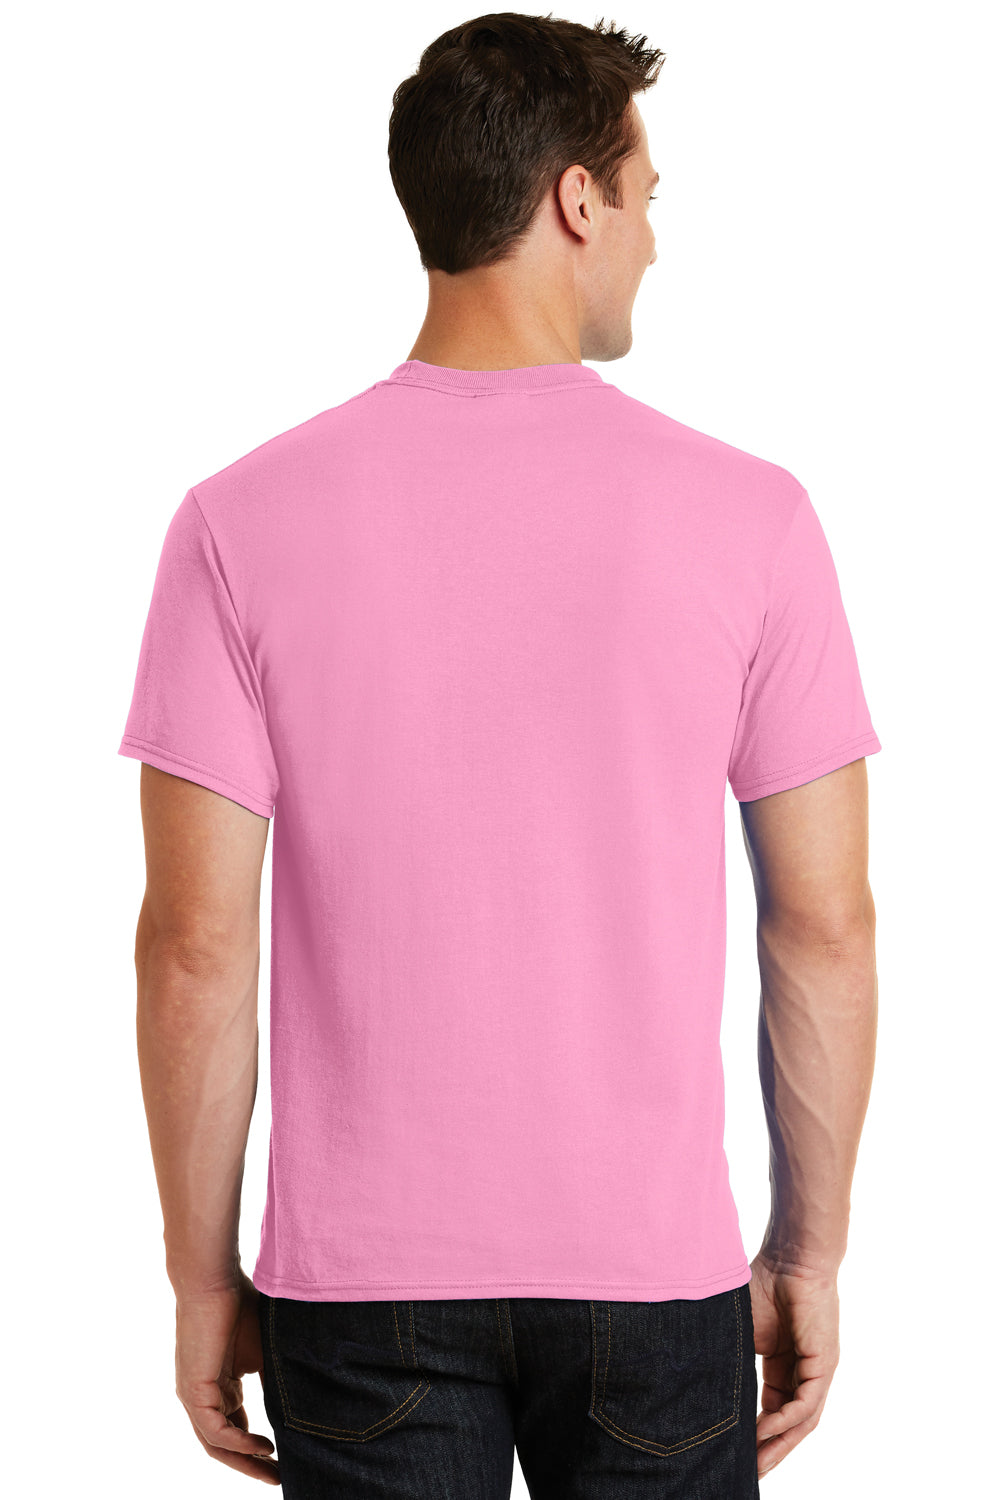 Port & Company PC55 Mens Core Short Sleeve Crewneck T-Shirt Candy Pink Back